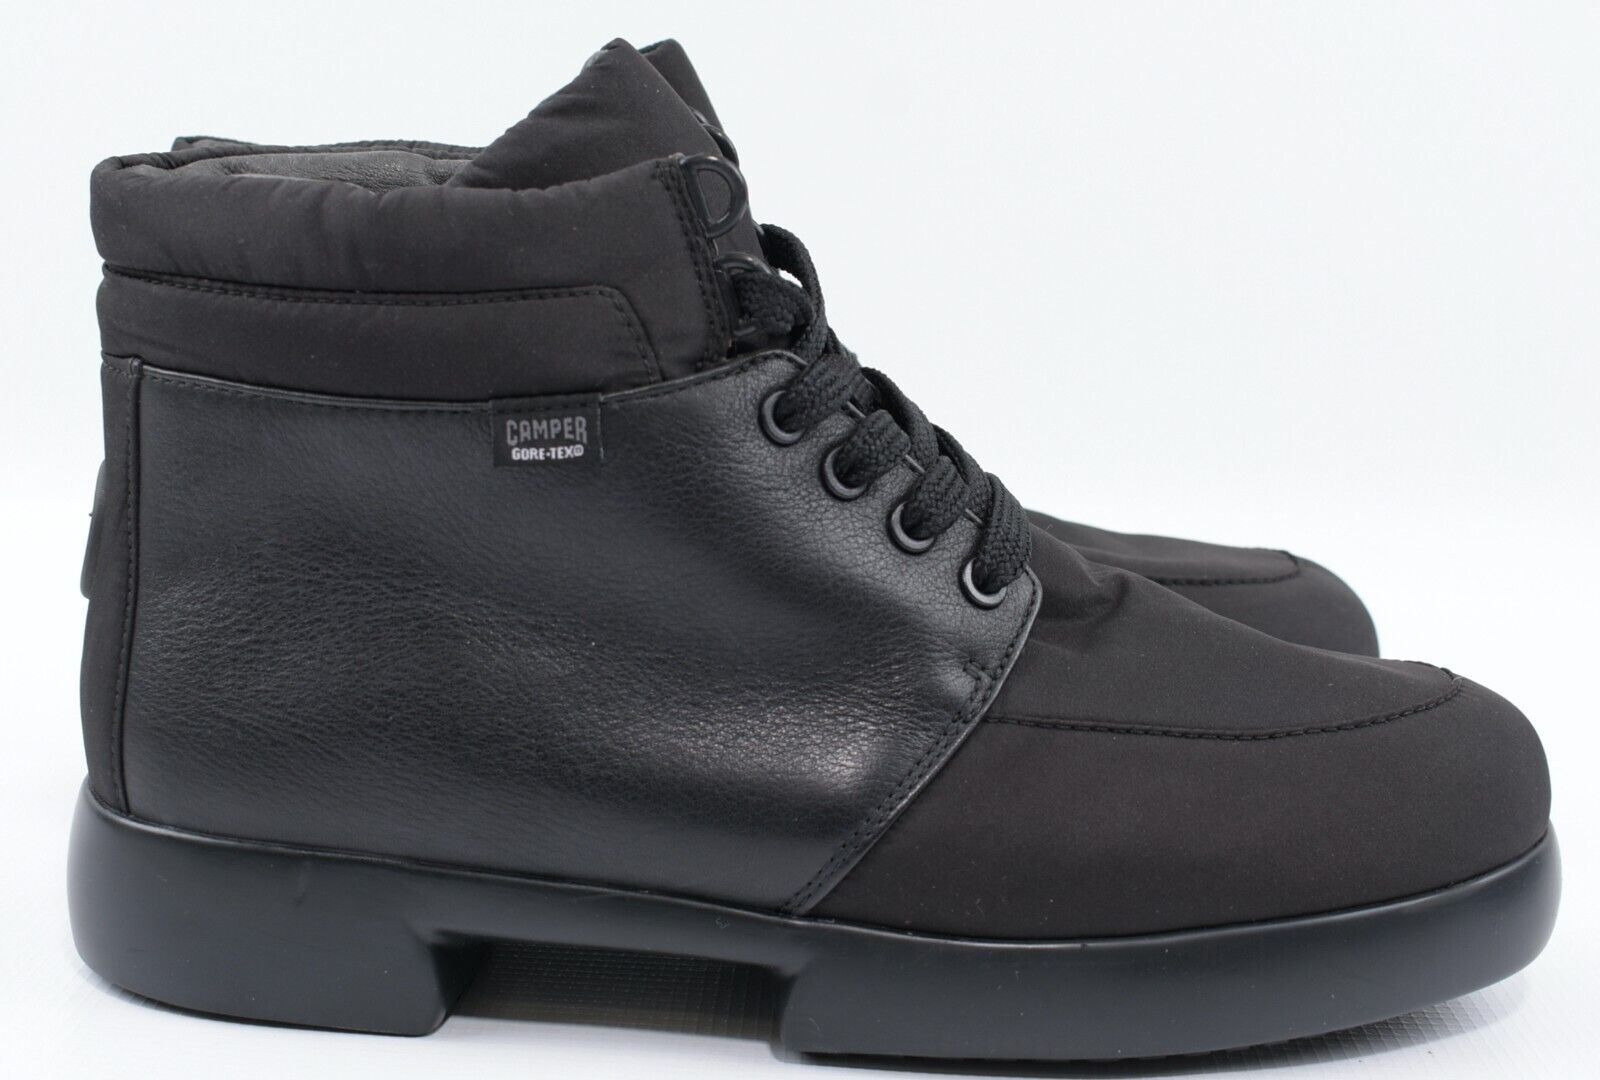 CAMPER Men's Black Genuine Leather & Nylon Boots, size UK 7 / EU 41